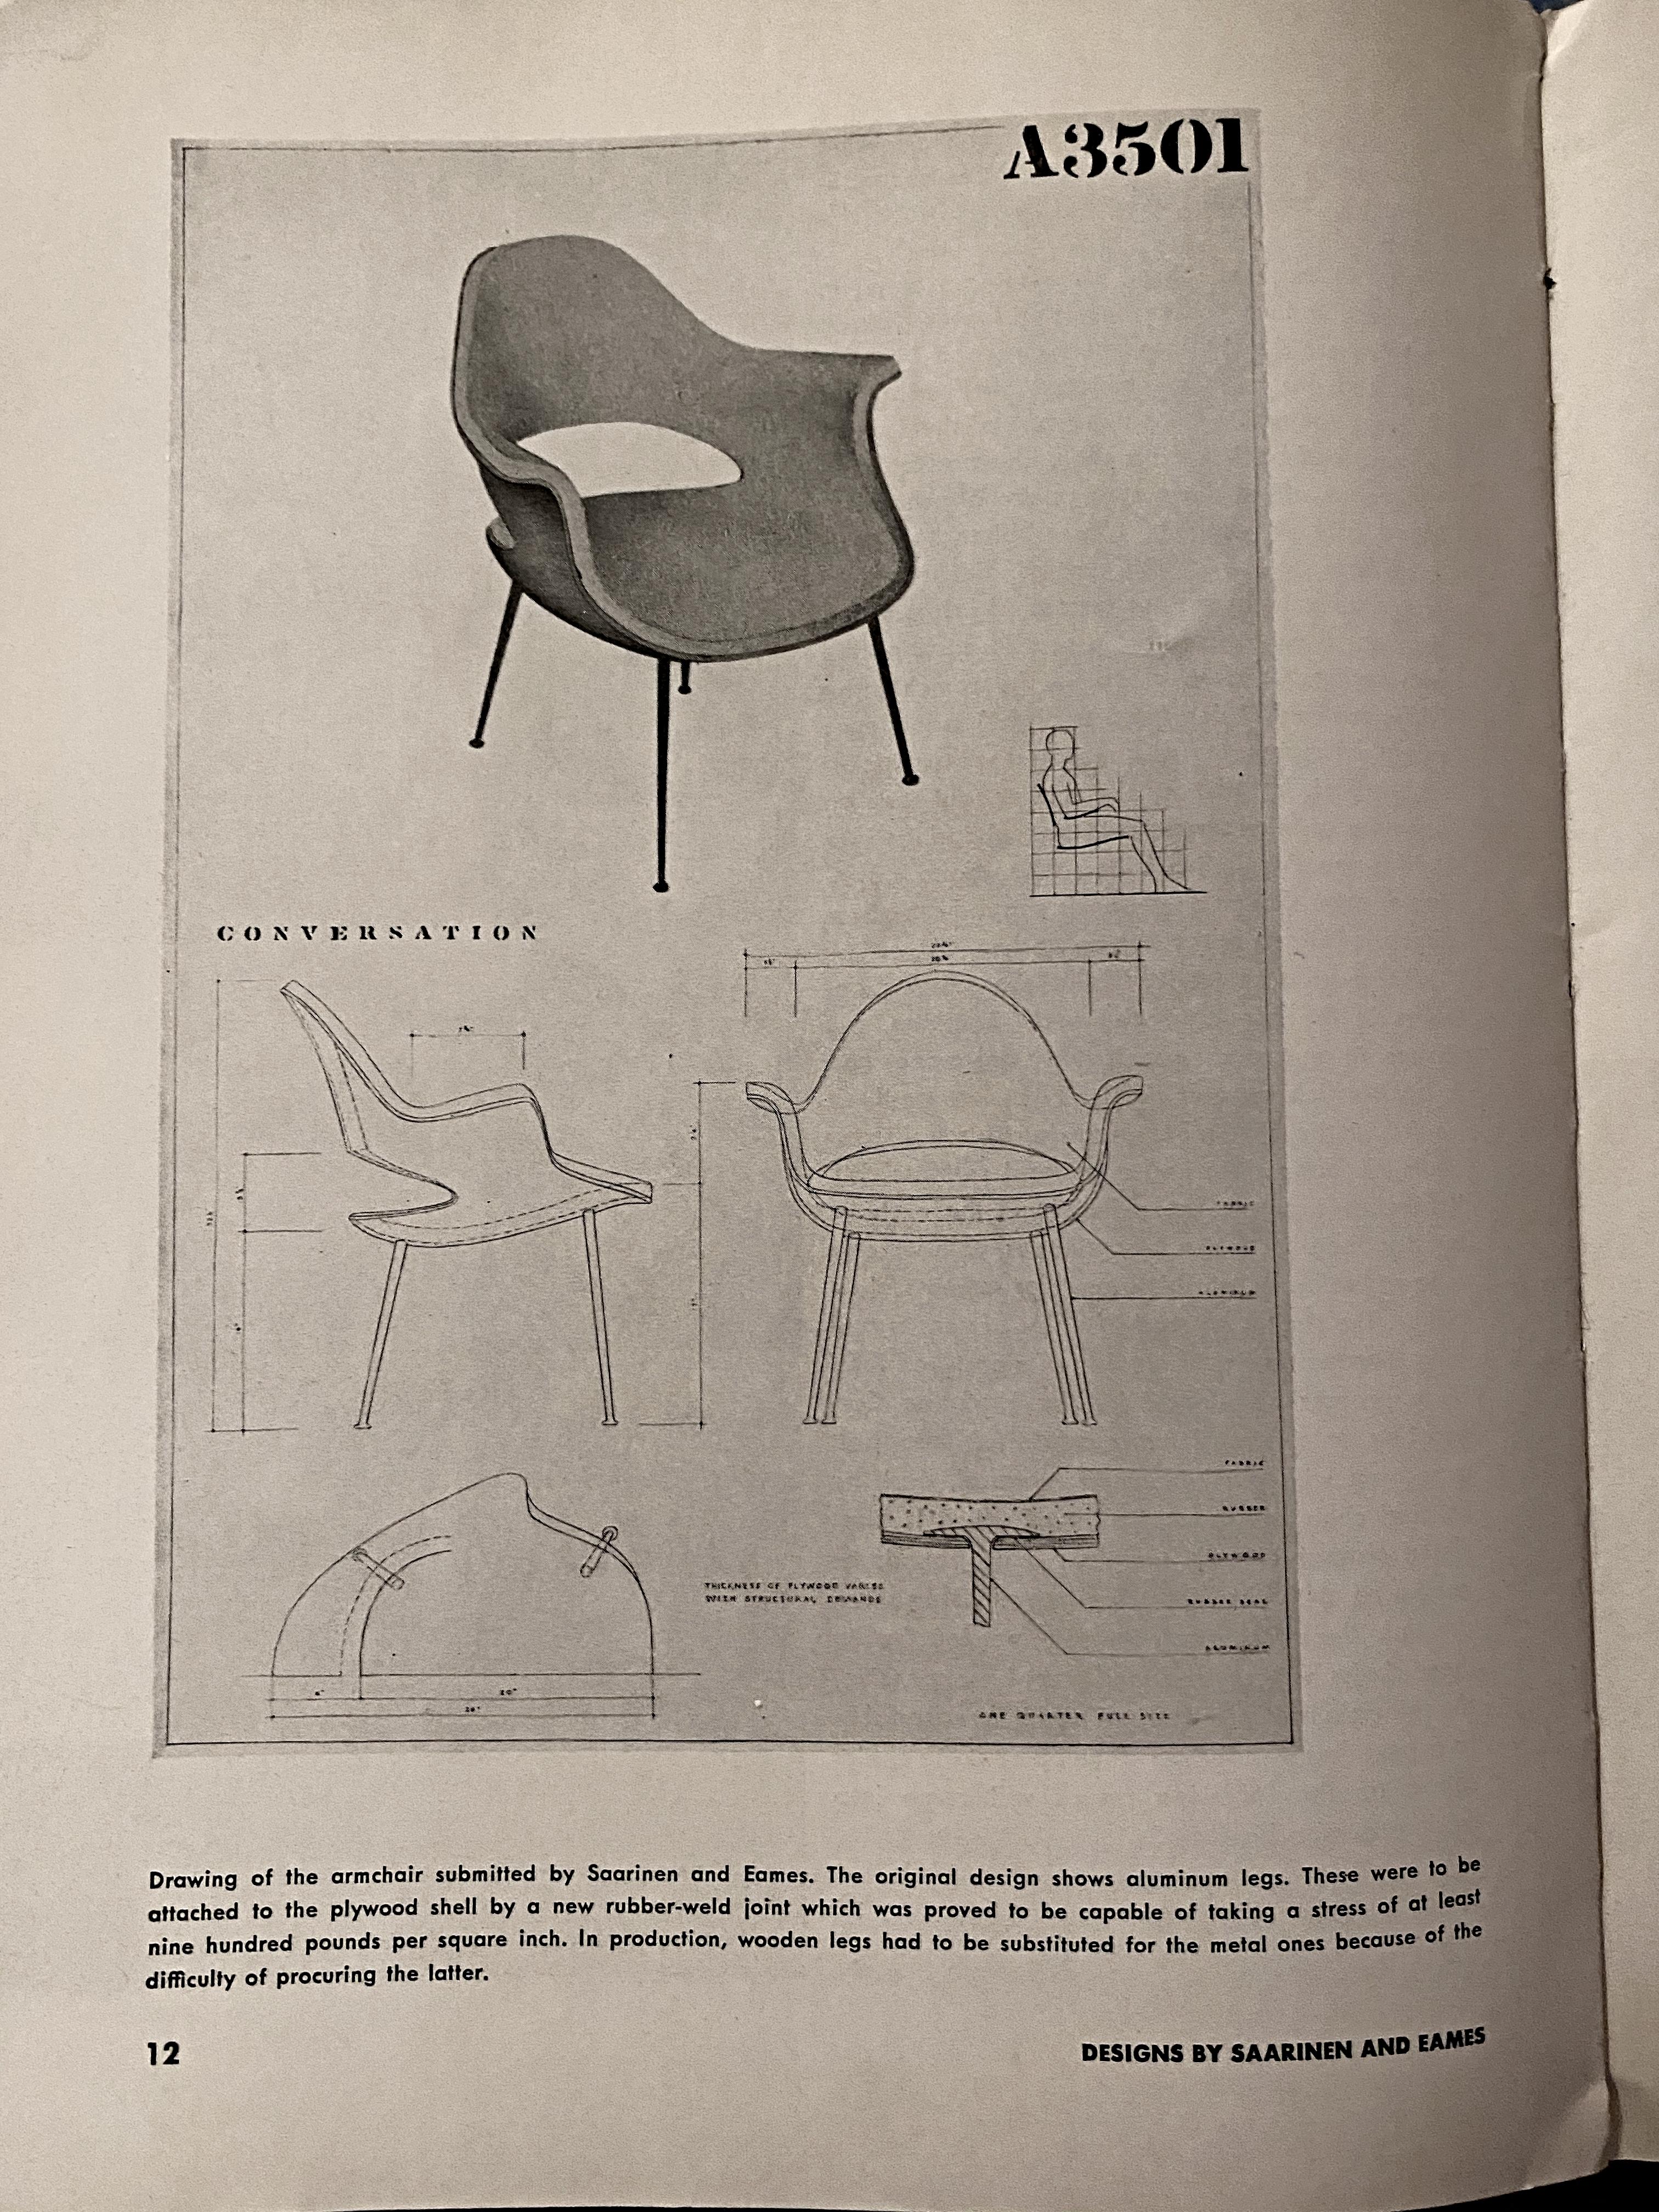 Fabric Charles Eames & Eero Saarinen “Organic Chair” Model No. A3501, 1950, USA